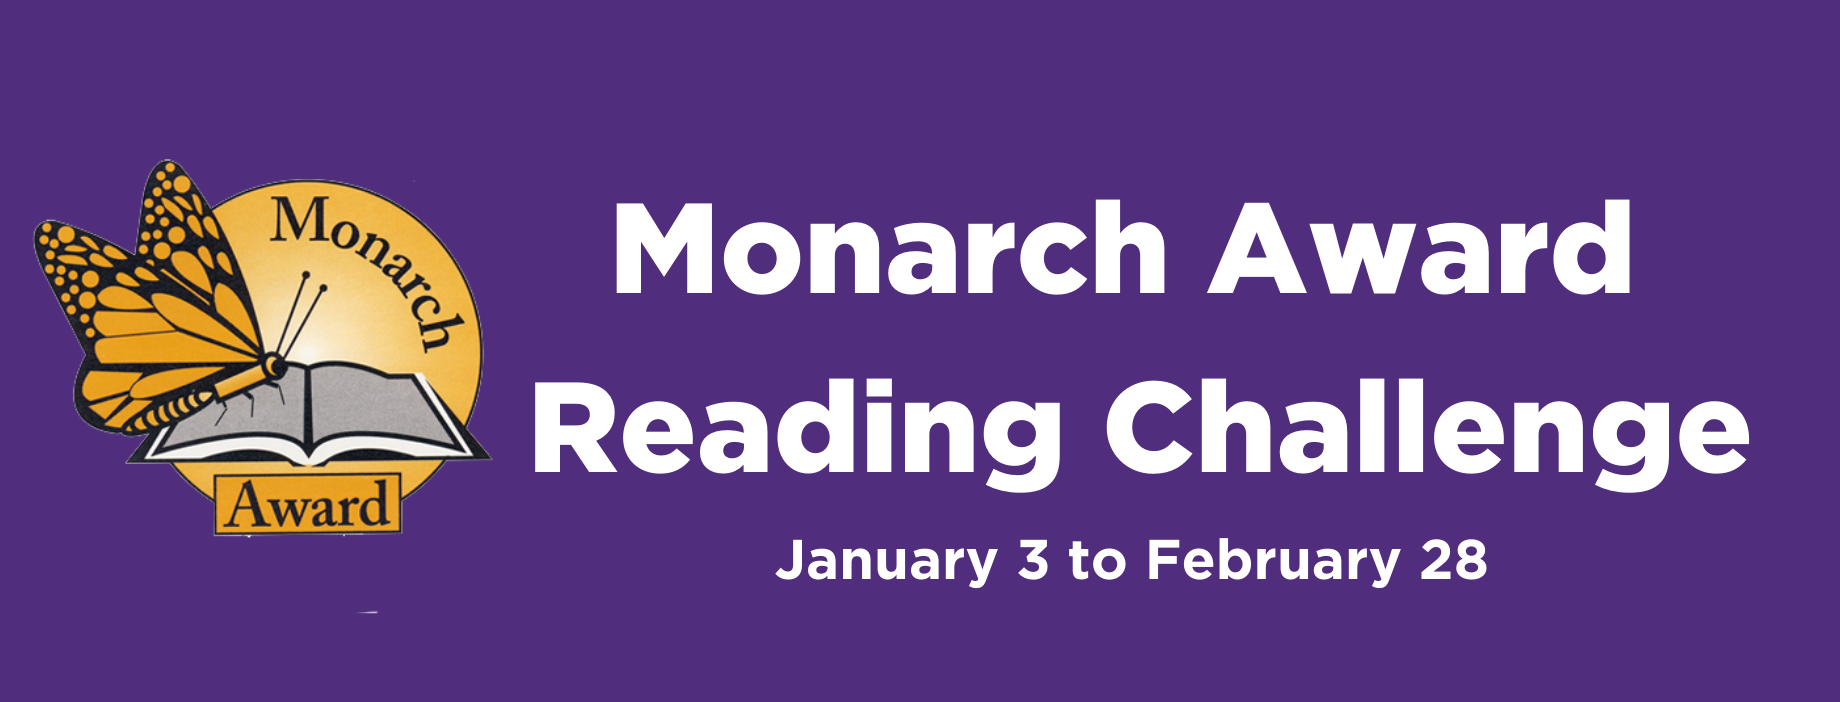 Monarch Award Reading Challenge